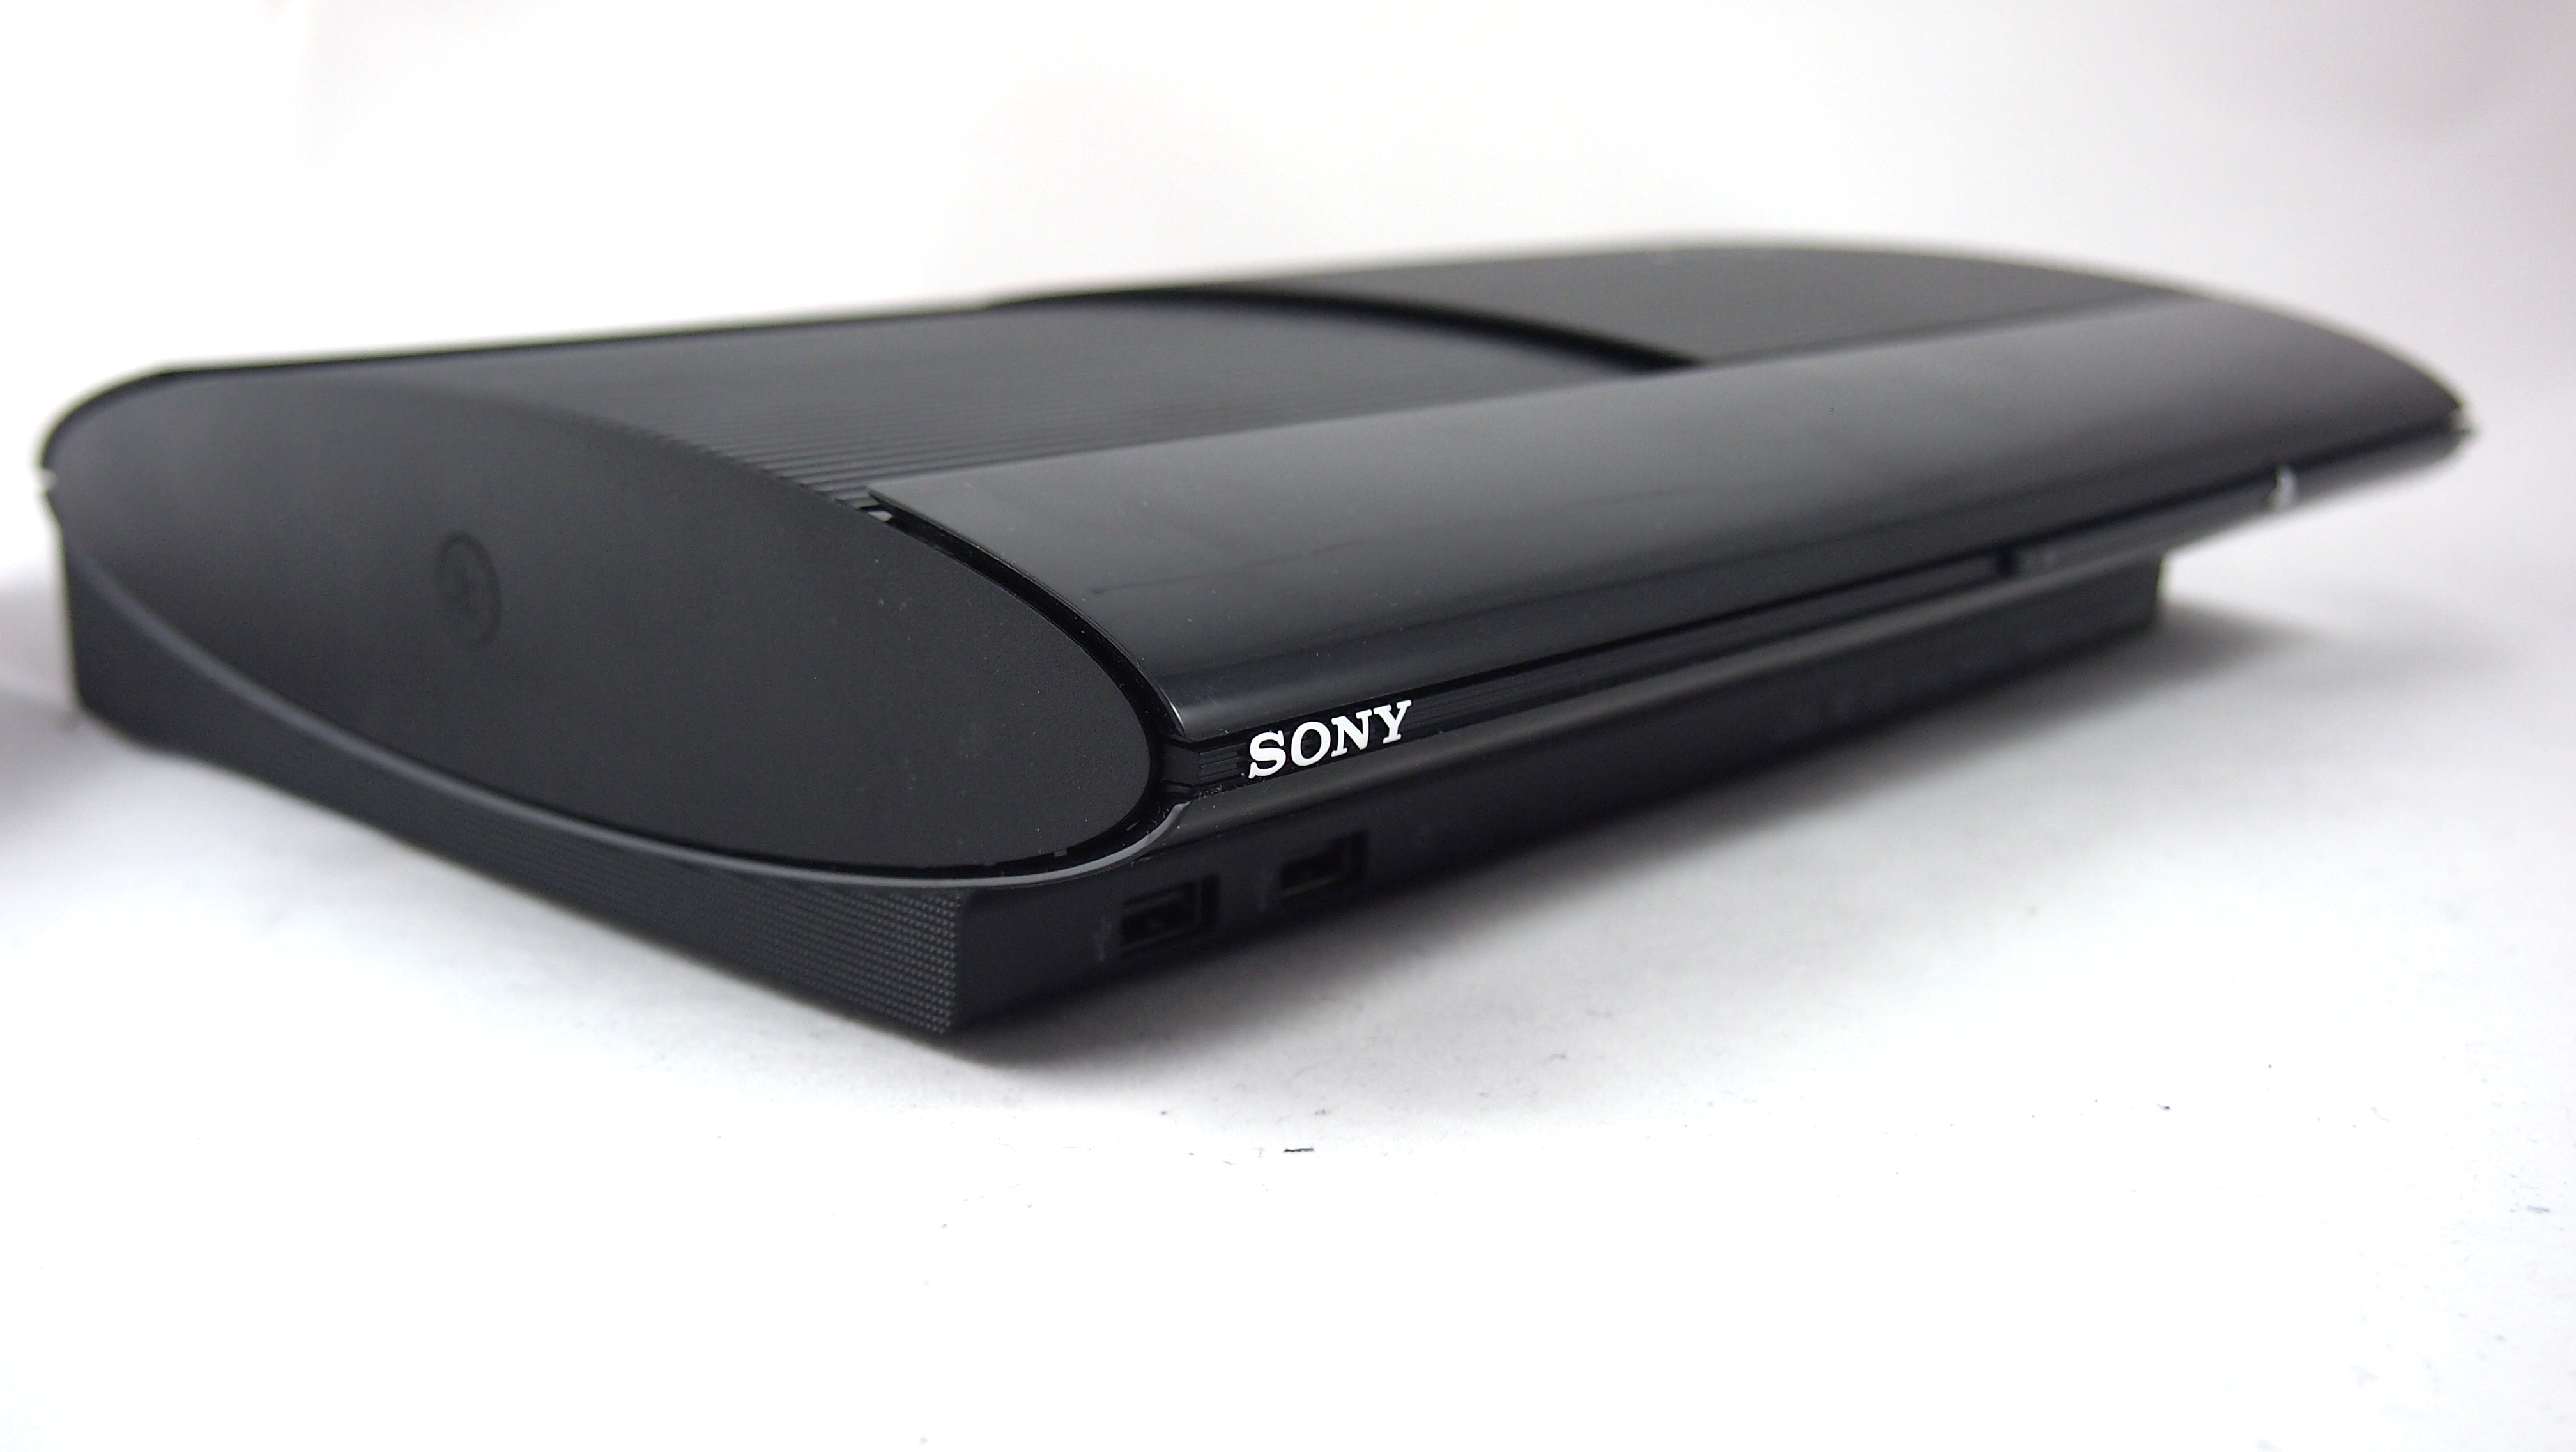 enthousiast Denemarken Overtreffen Sony PS3 review | TechRadar